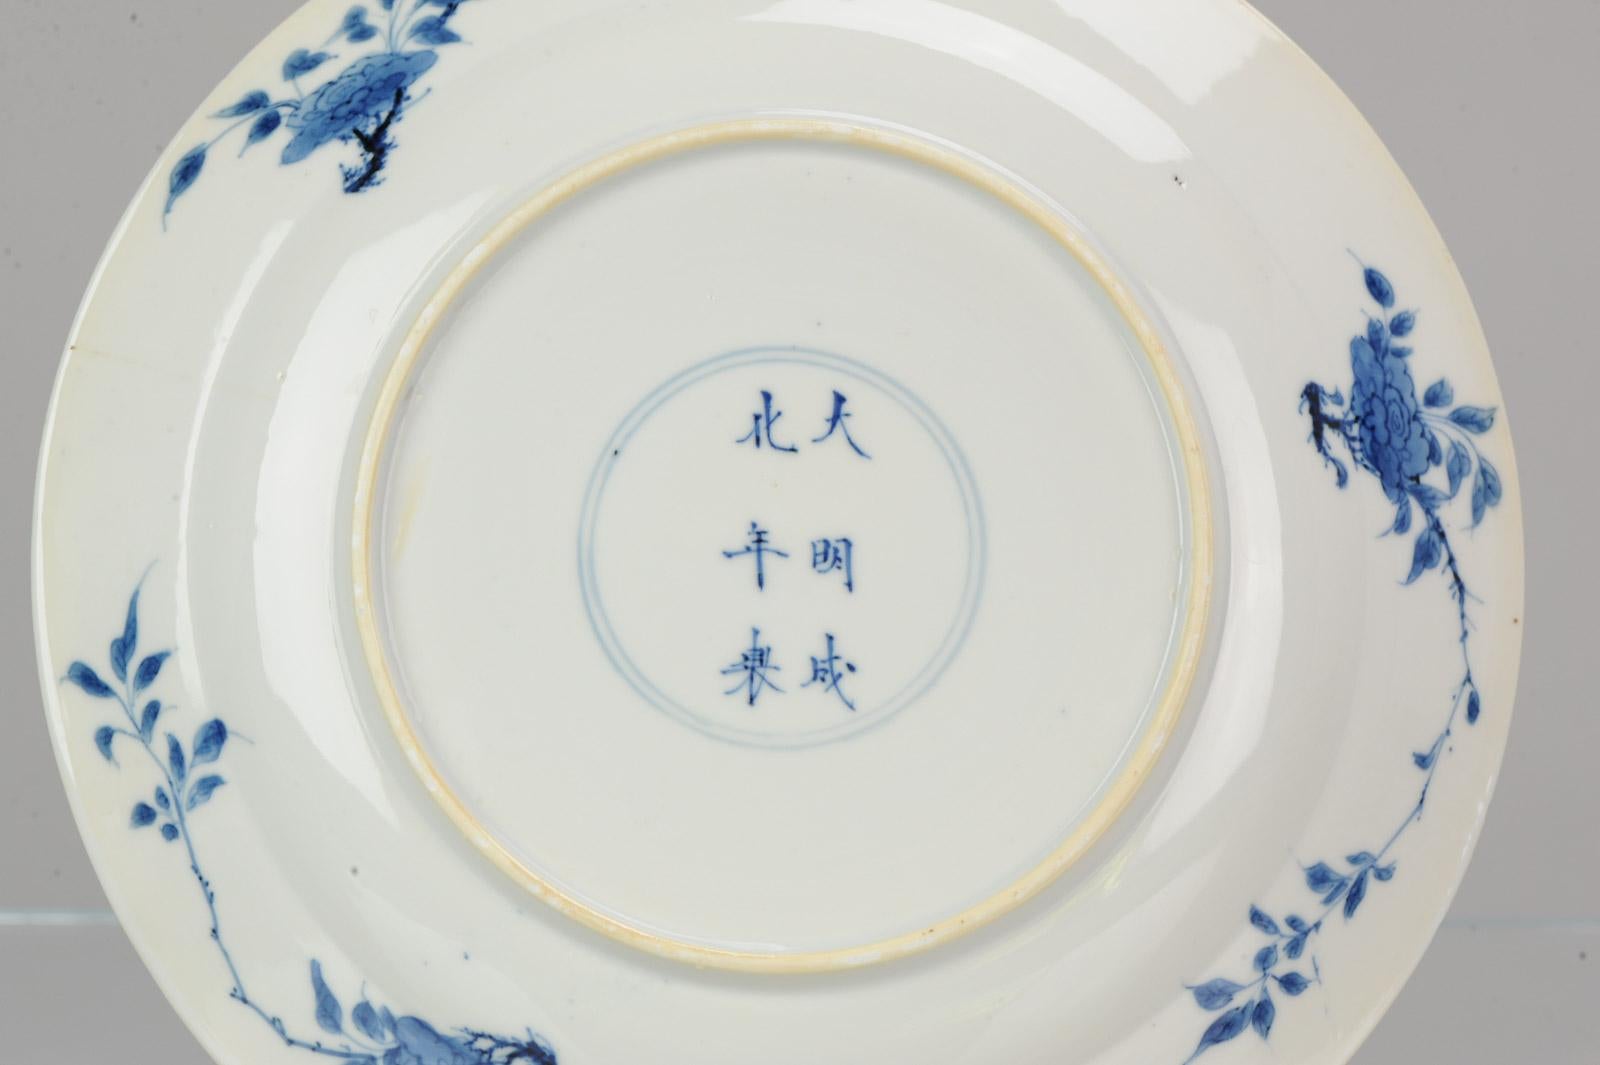 18th Century Kangxi Period Chinese Porcelain Plate Pagode Figure Chenghua Mark, circa 1700